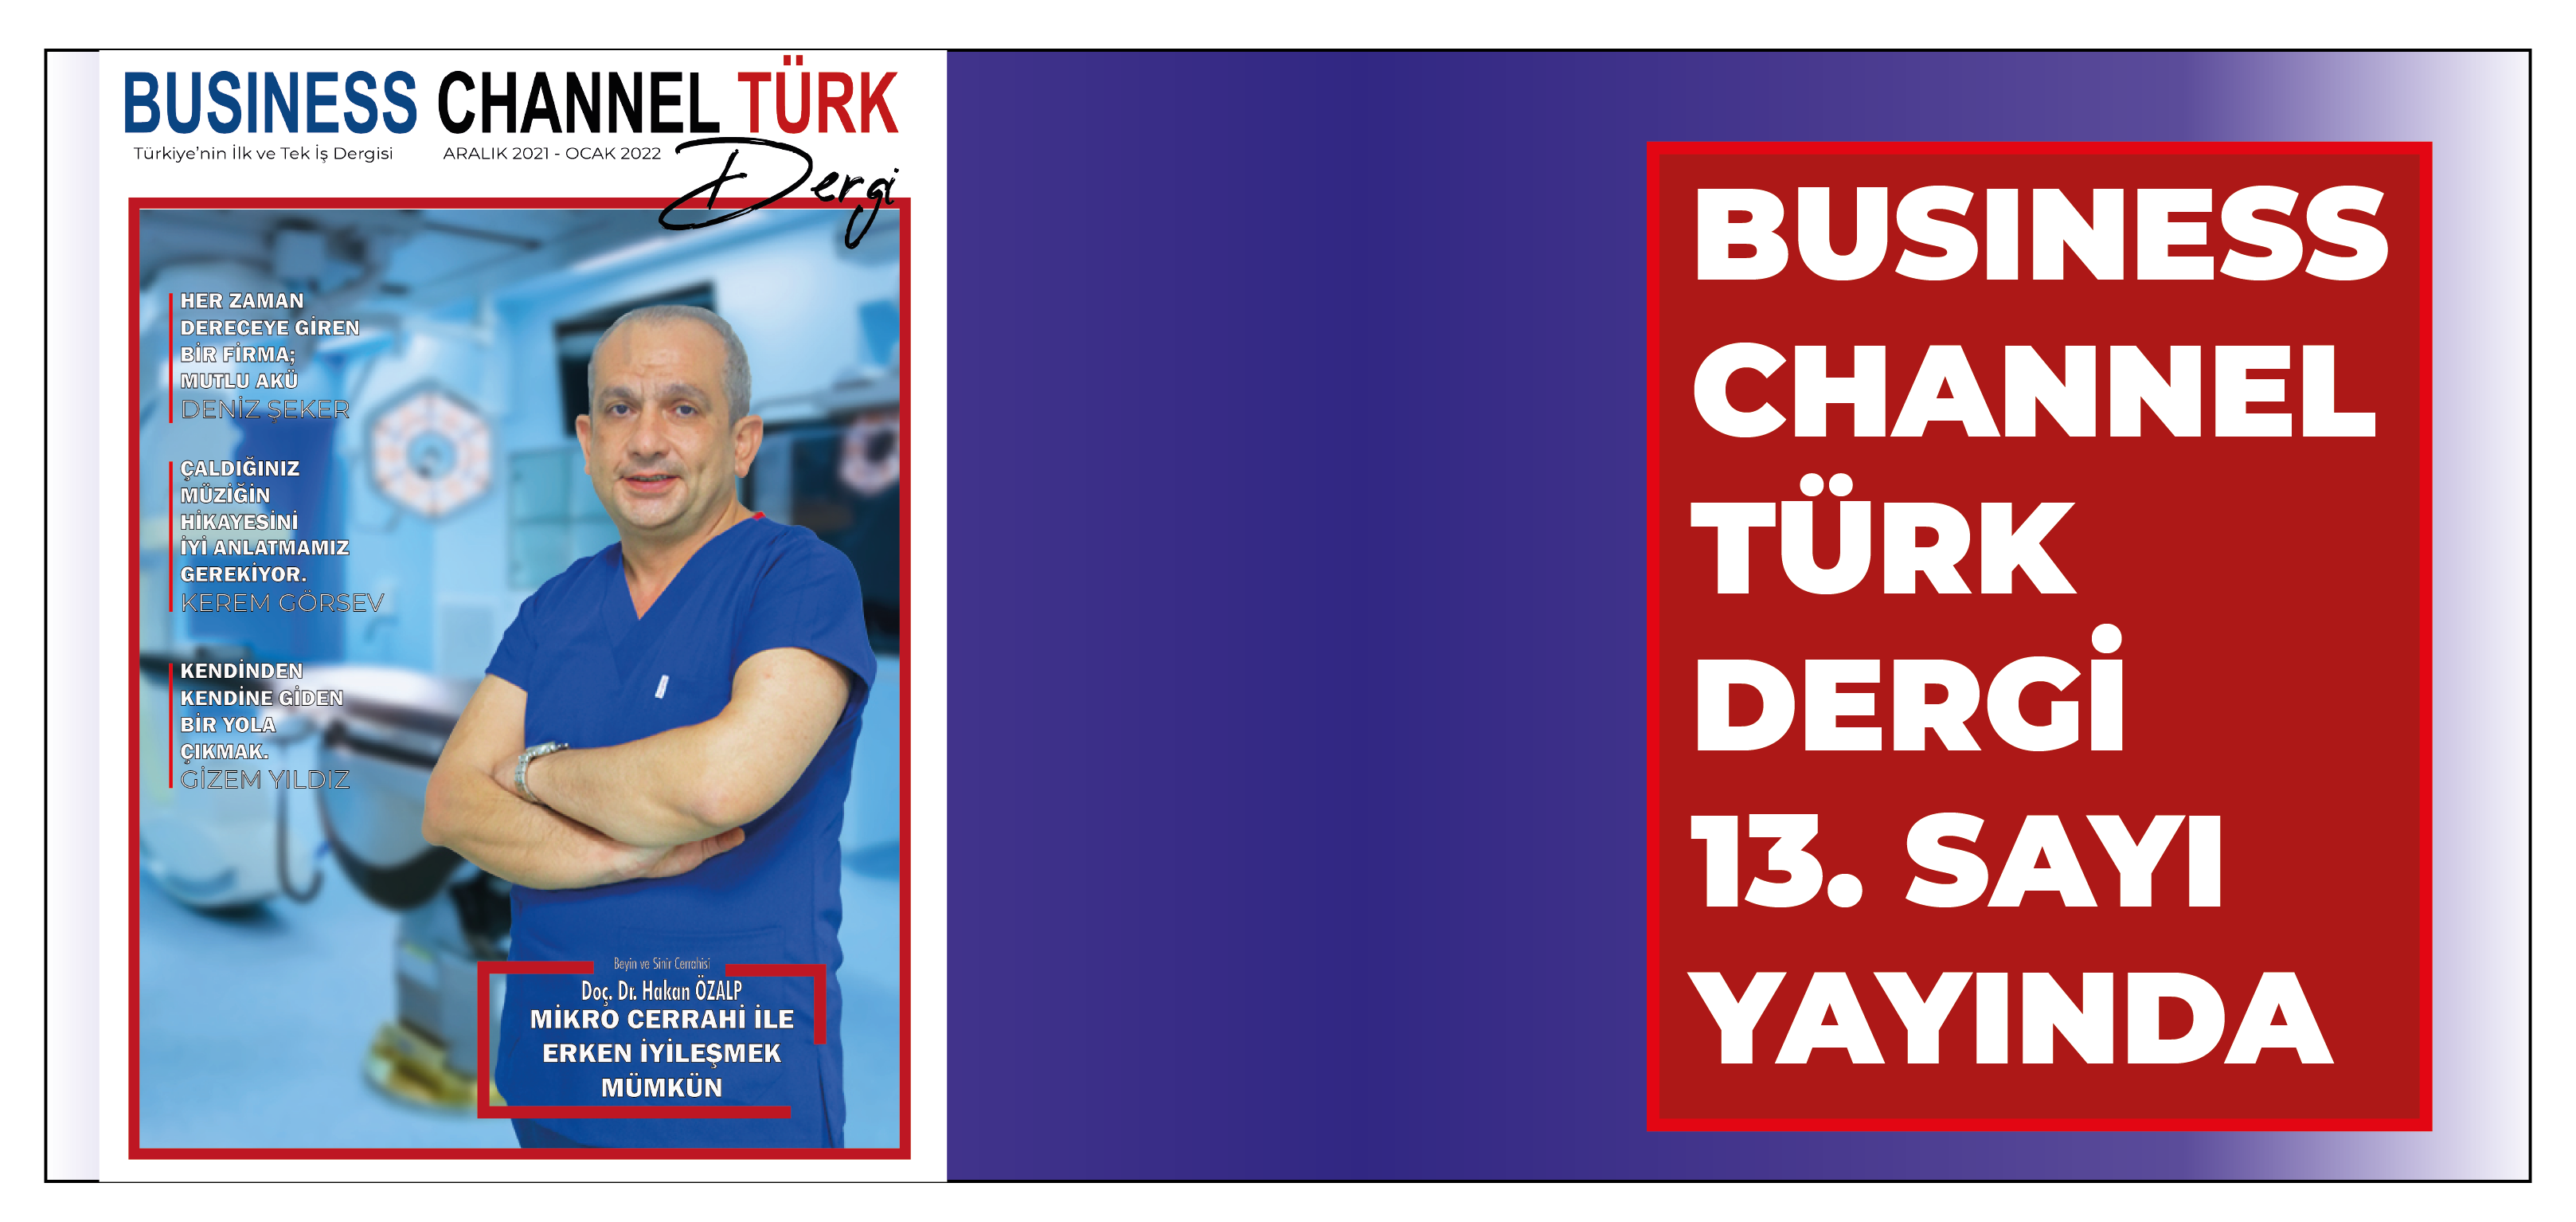 BUSİNESS CHANNEL DERGİSİ 13. SAYISI ÇIKTI